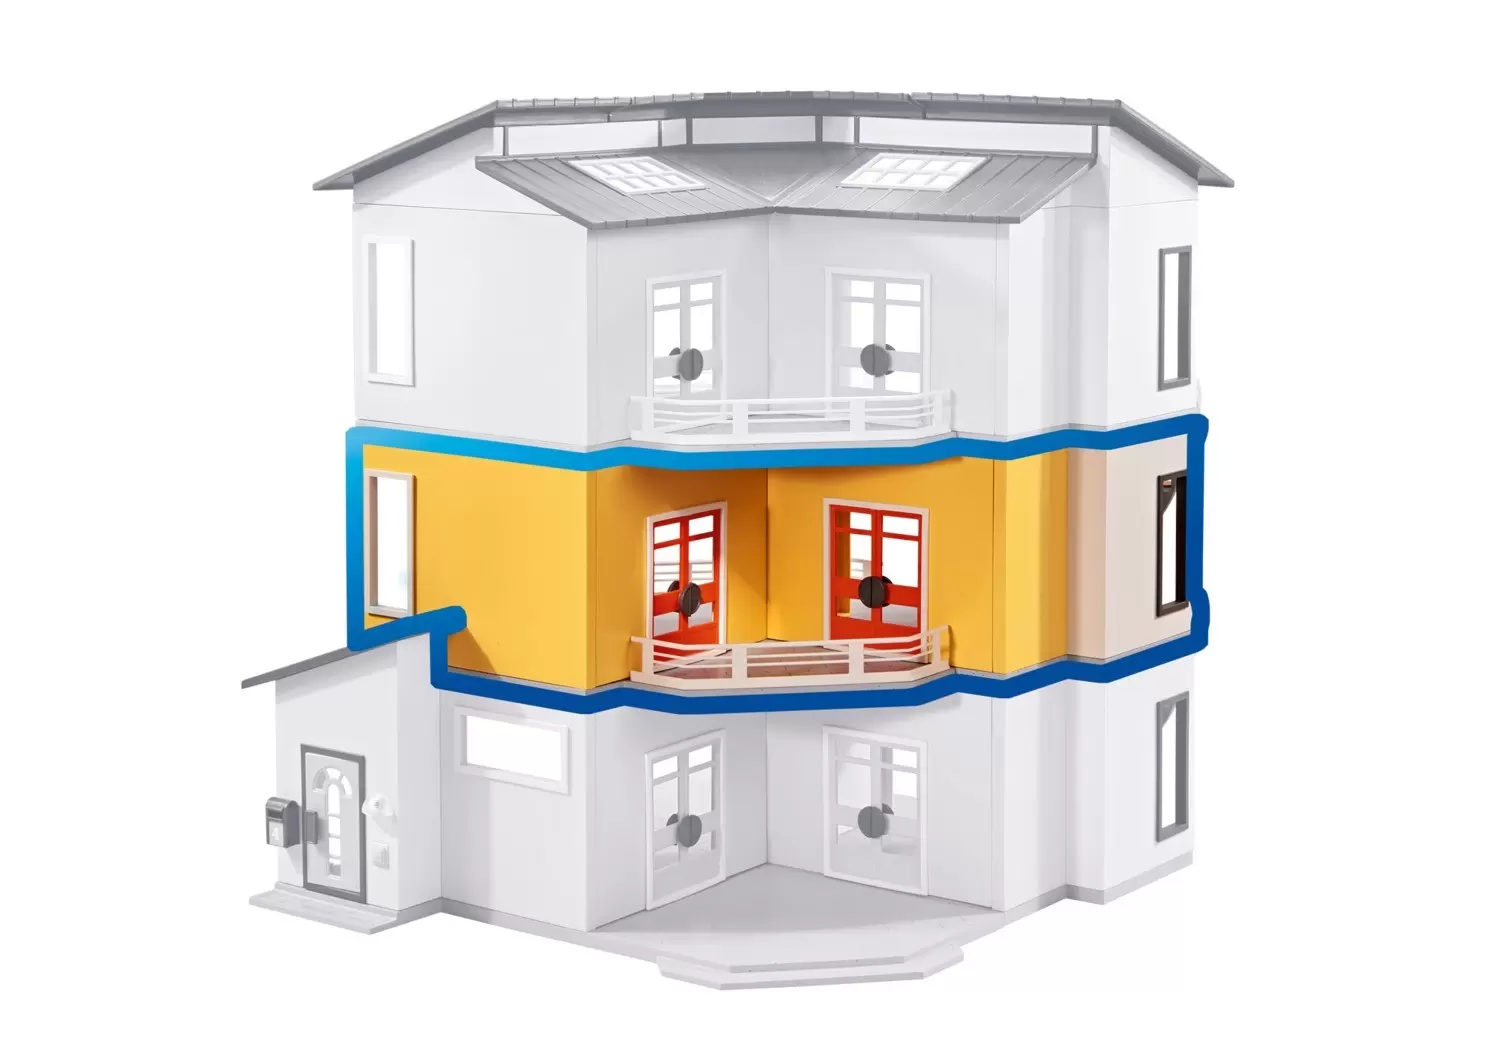 Playmobil Add On 6555 Light Kit for the Modern House 9266